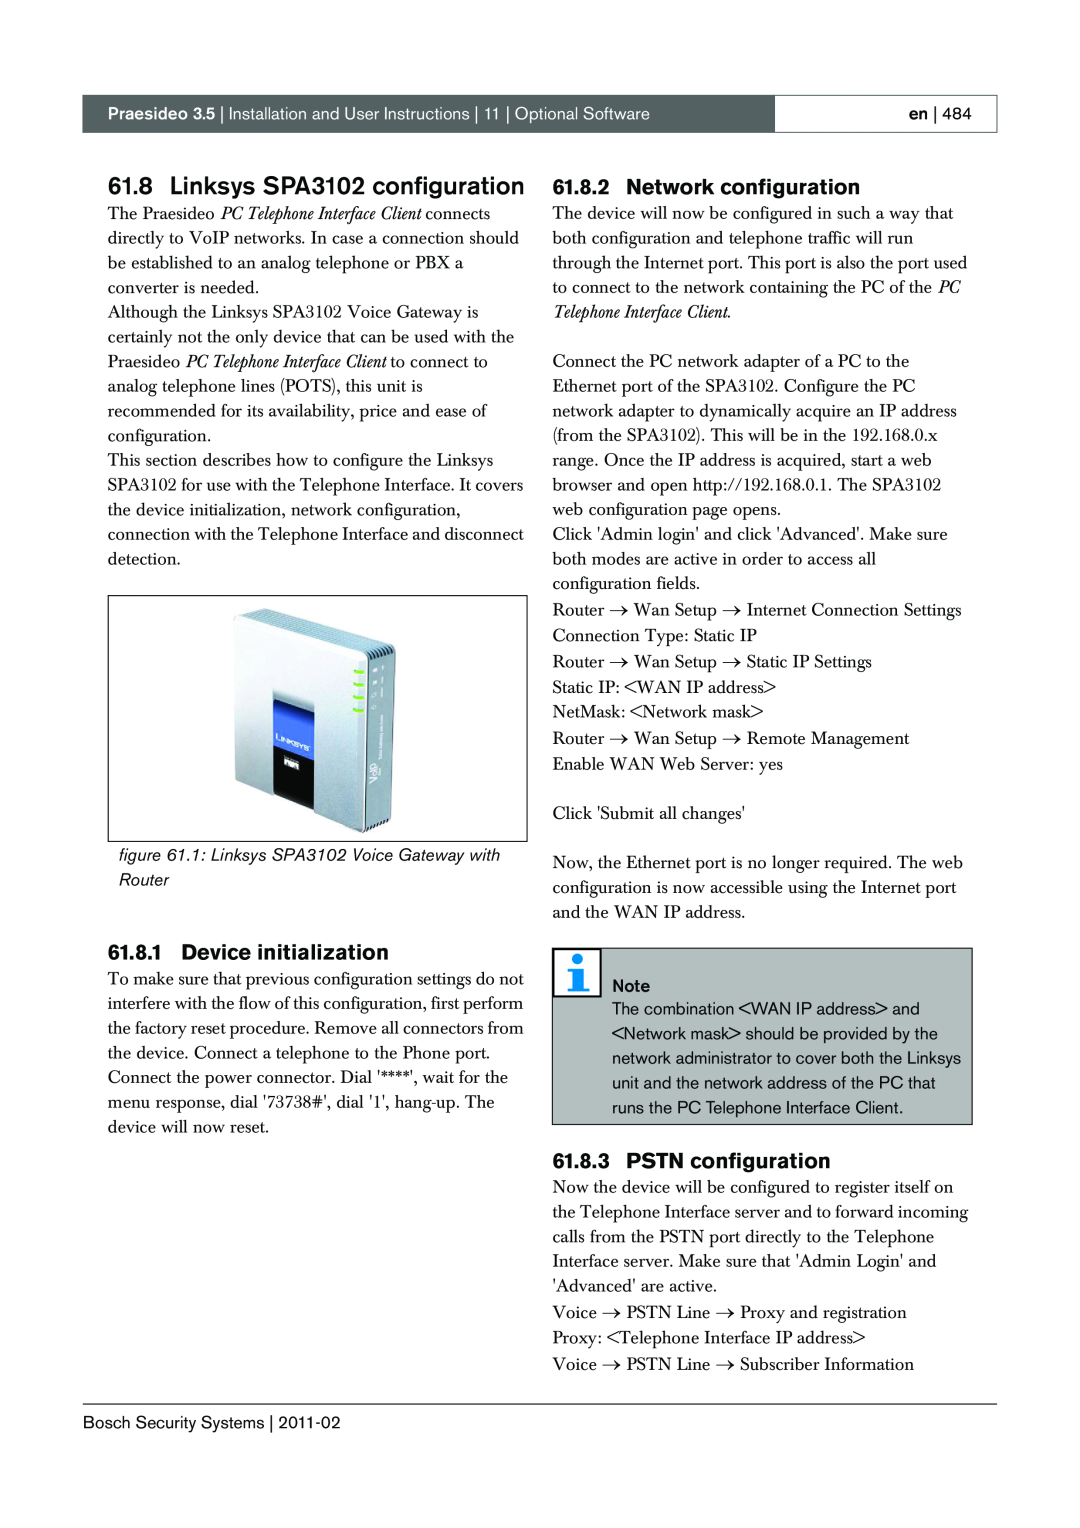 Bosch Appliances 3.5 manual Linksys SPA3102 configuration, Network configuration, Device initialization, PSTN configuration 